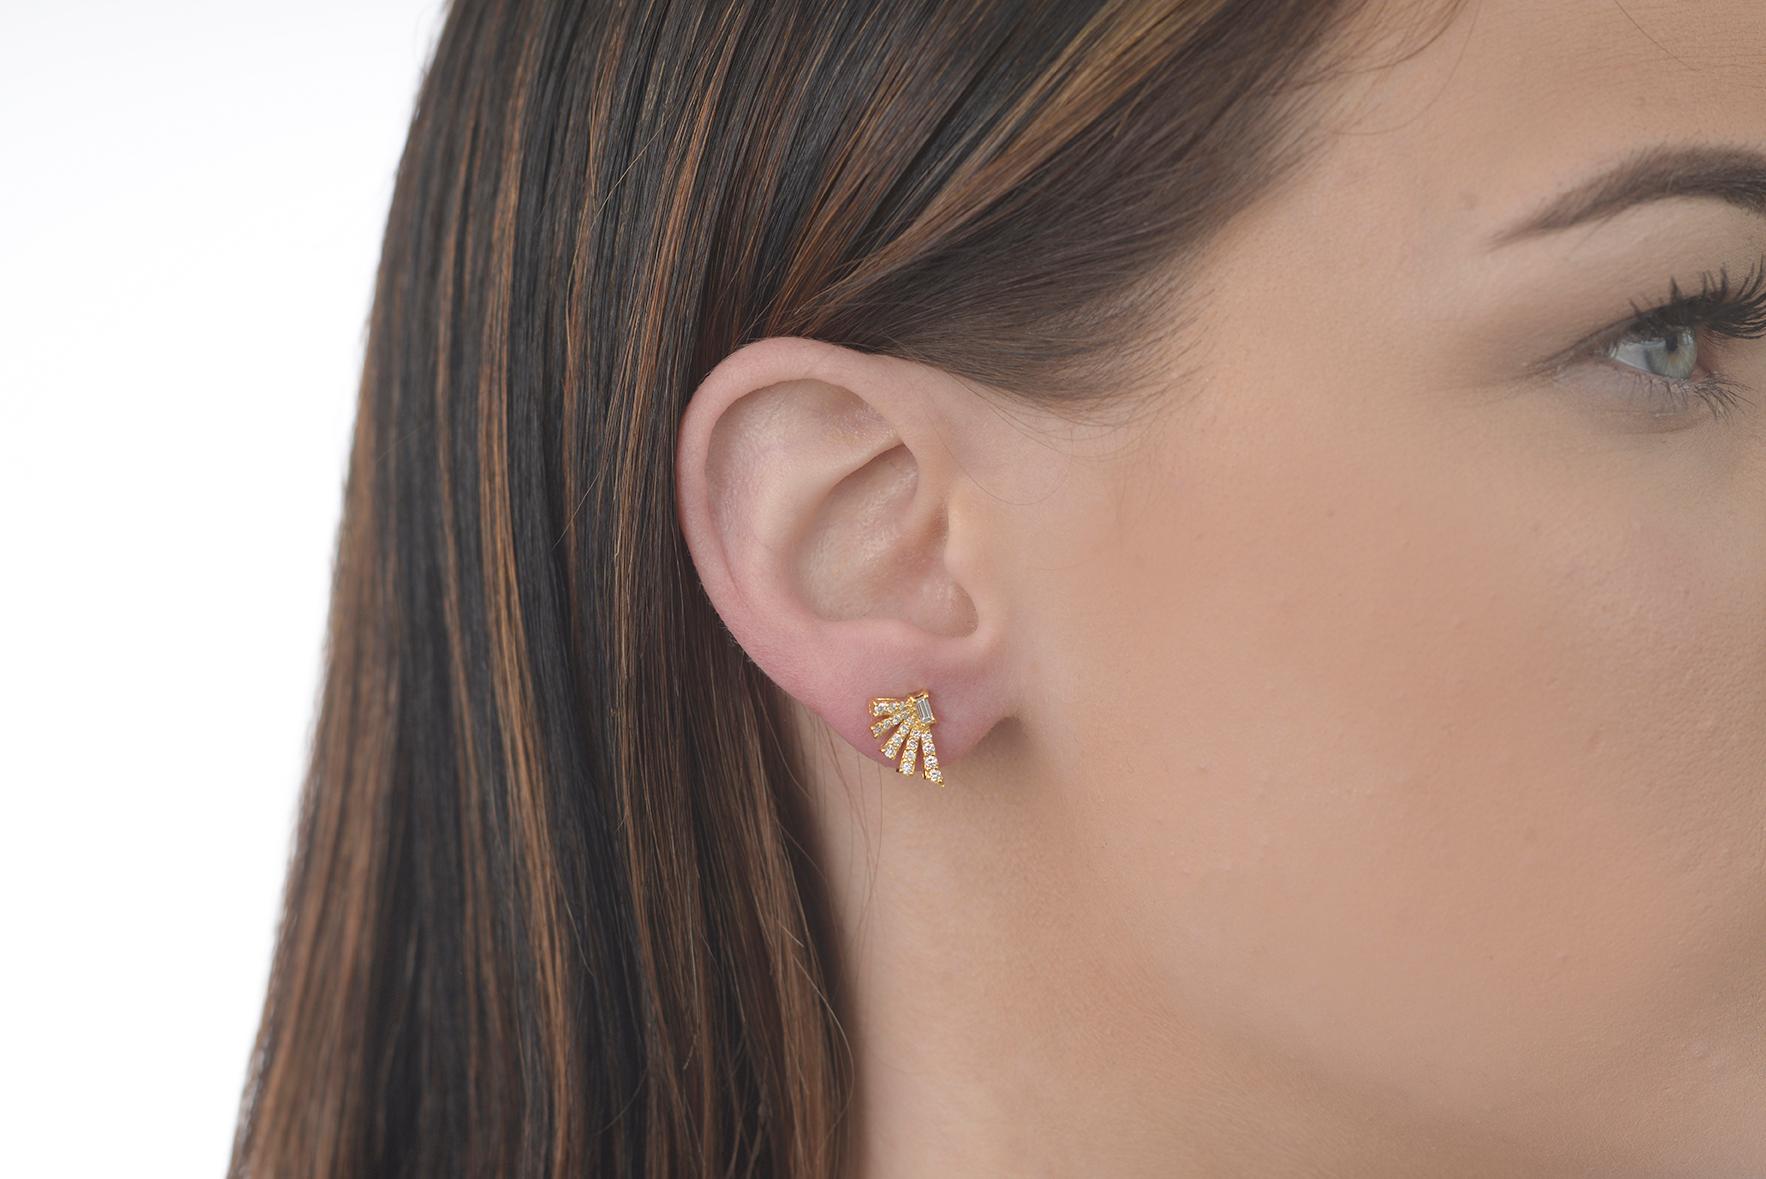 Angular fan earrings with diamonds in 18k yellow gold.